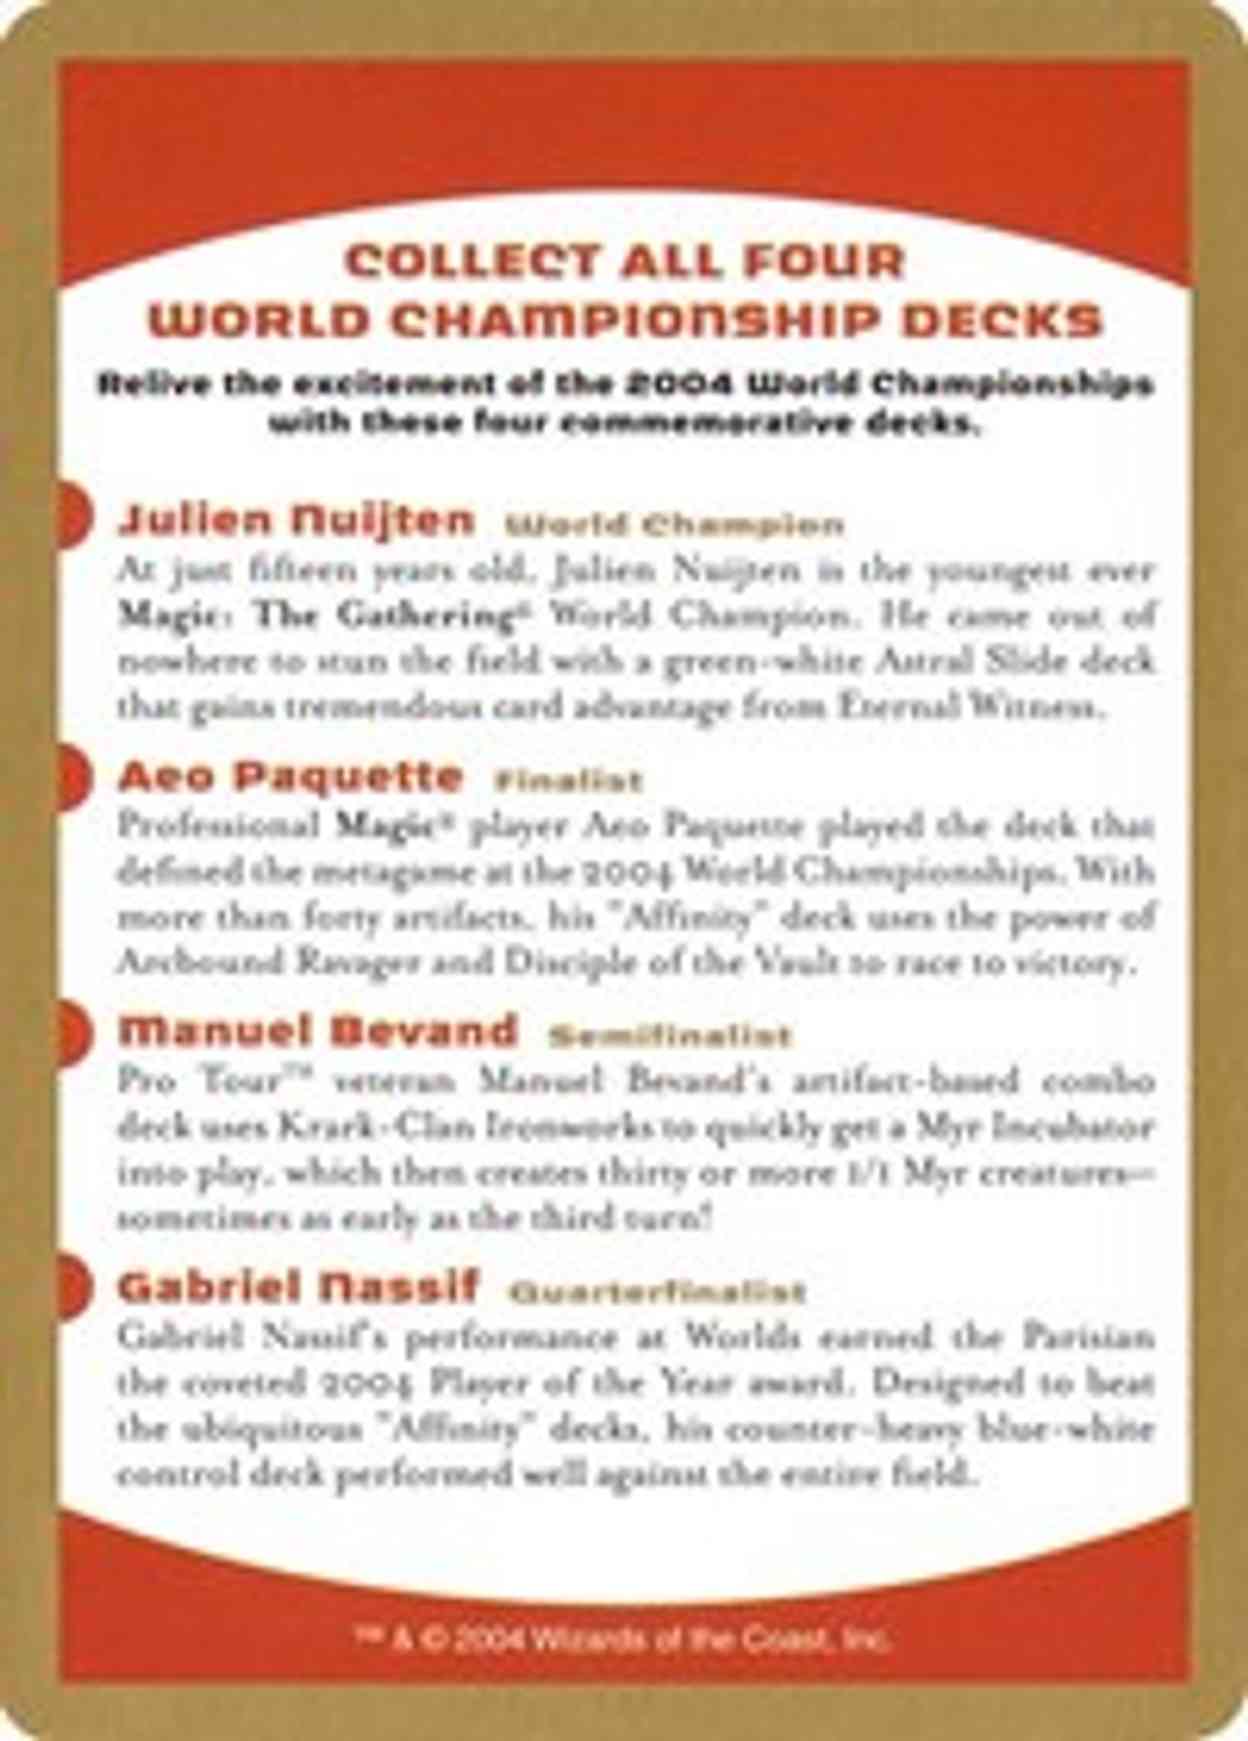 2004 World Championship Advertisement Card magic card front